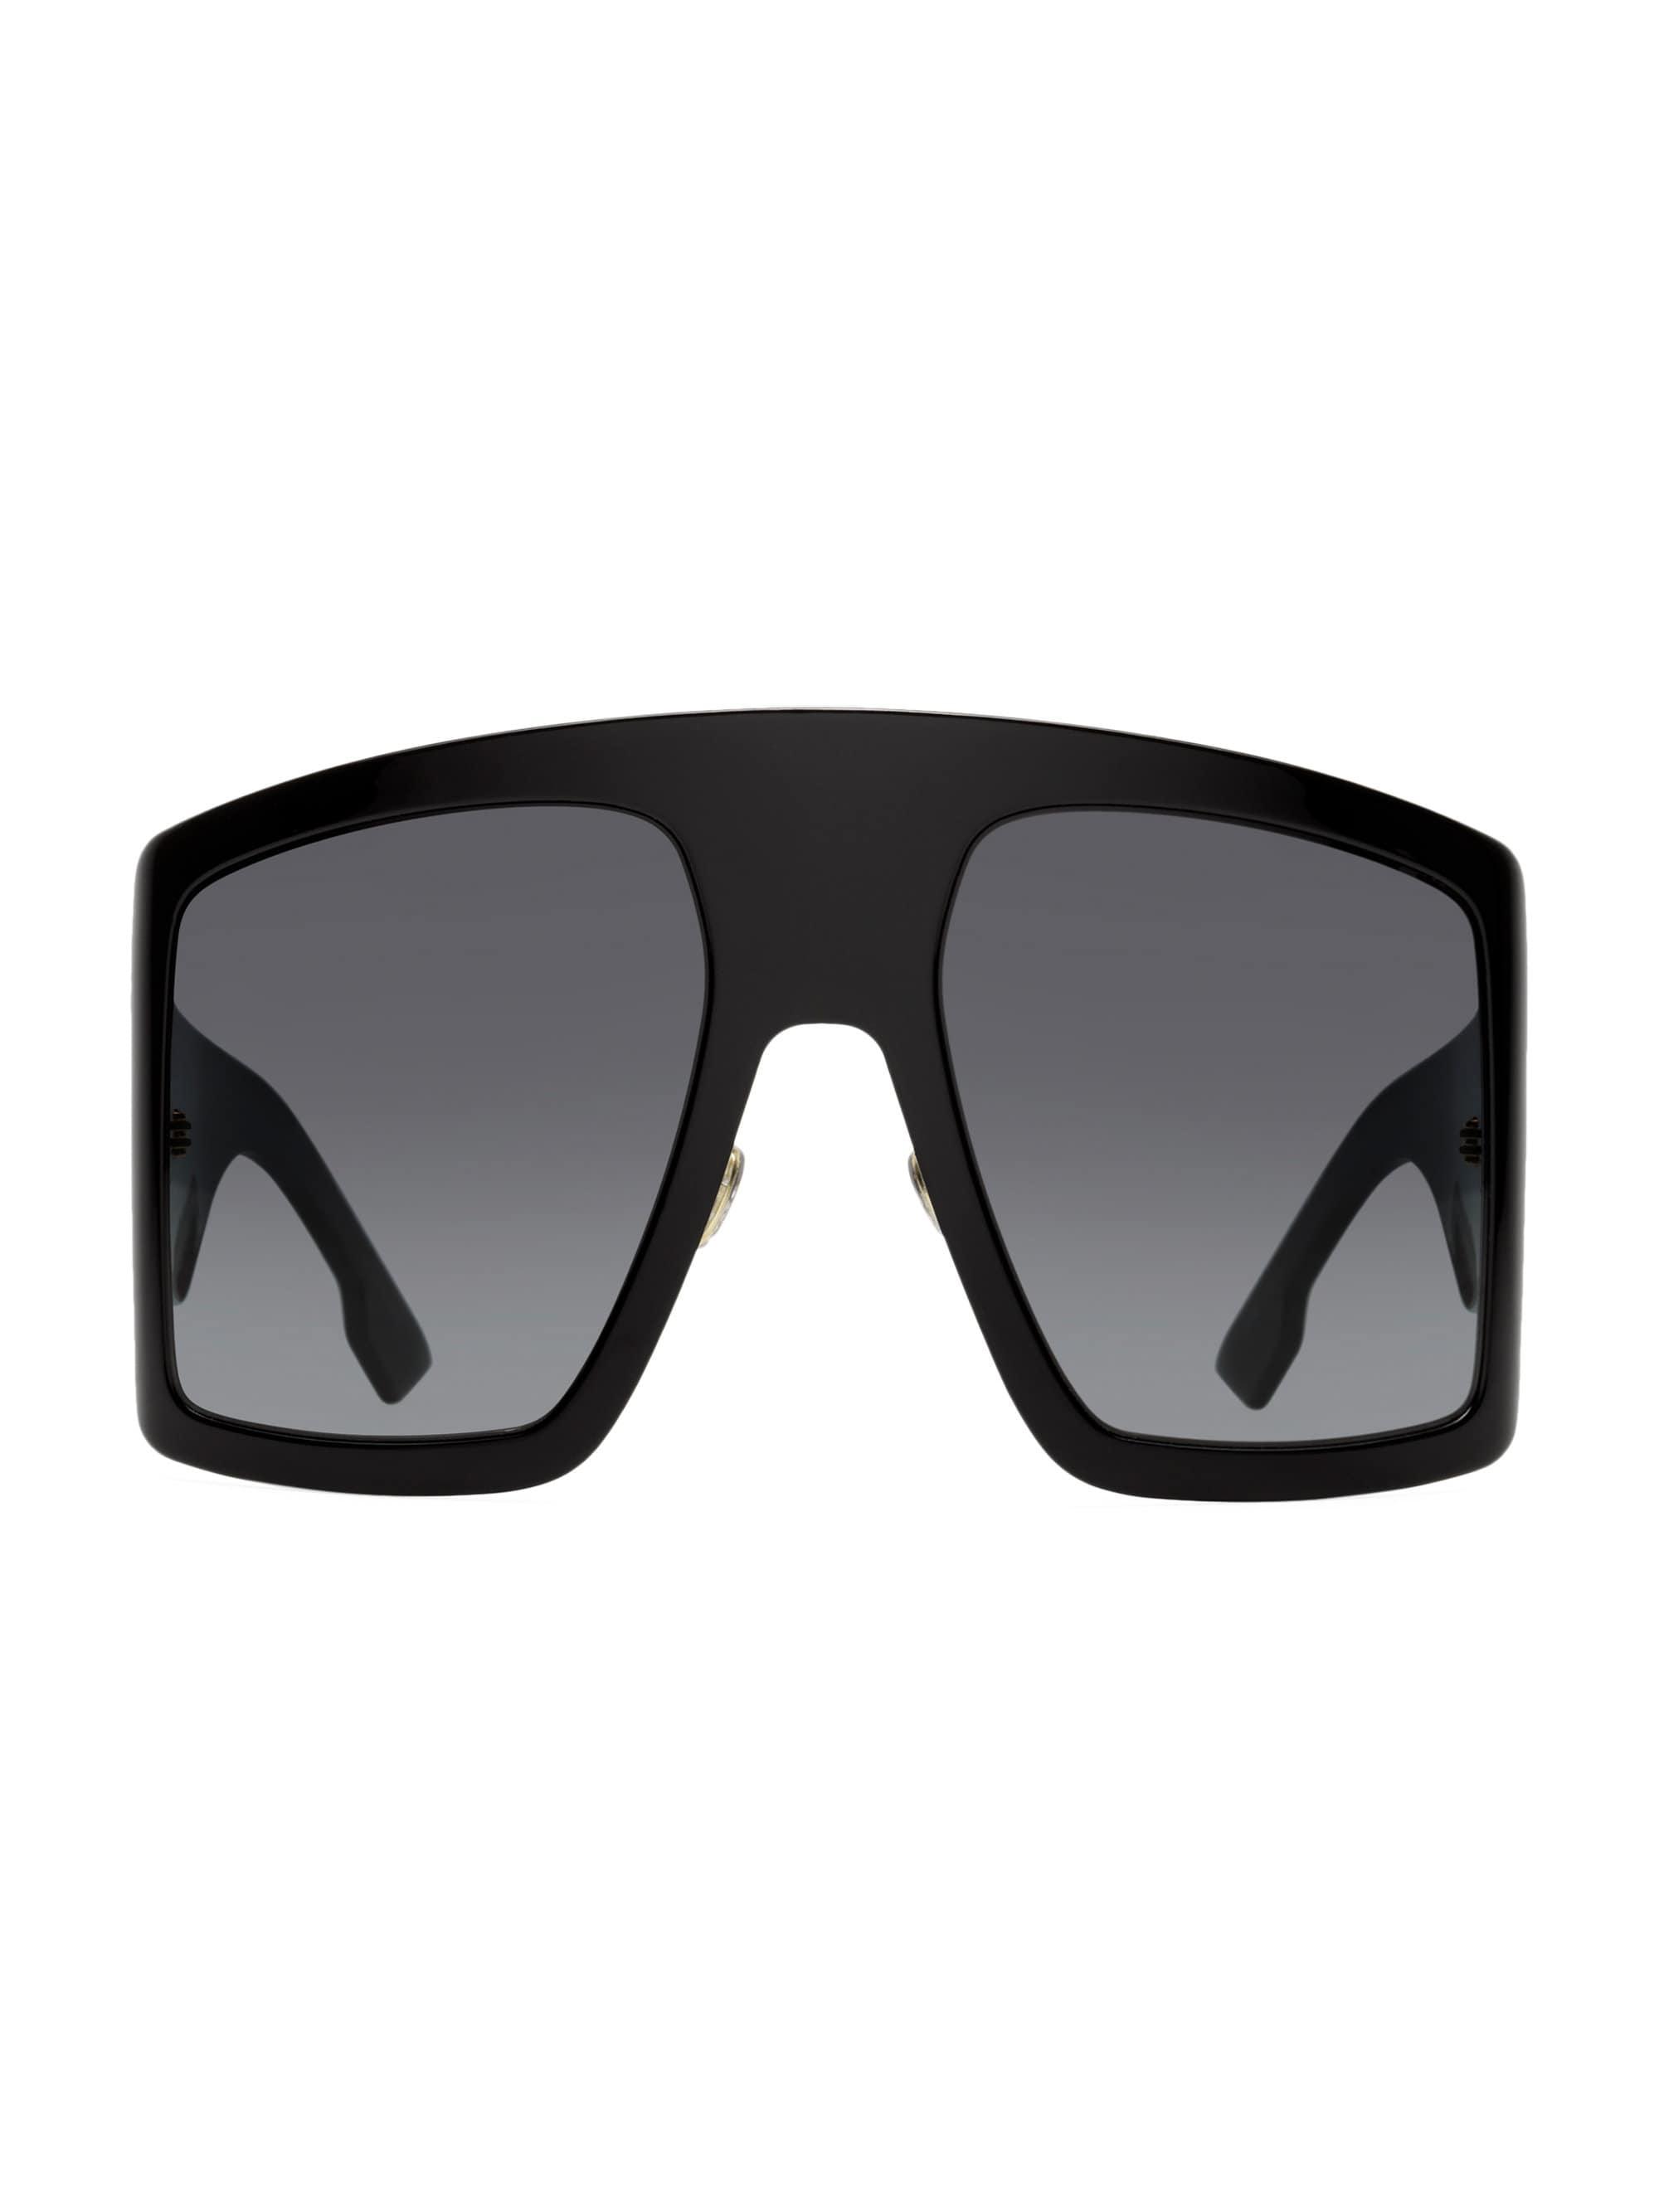 Dior Solight 60mm Navigator Sunglasses in Black for Men - Lyst